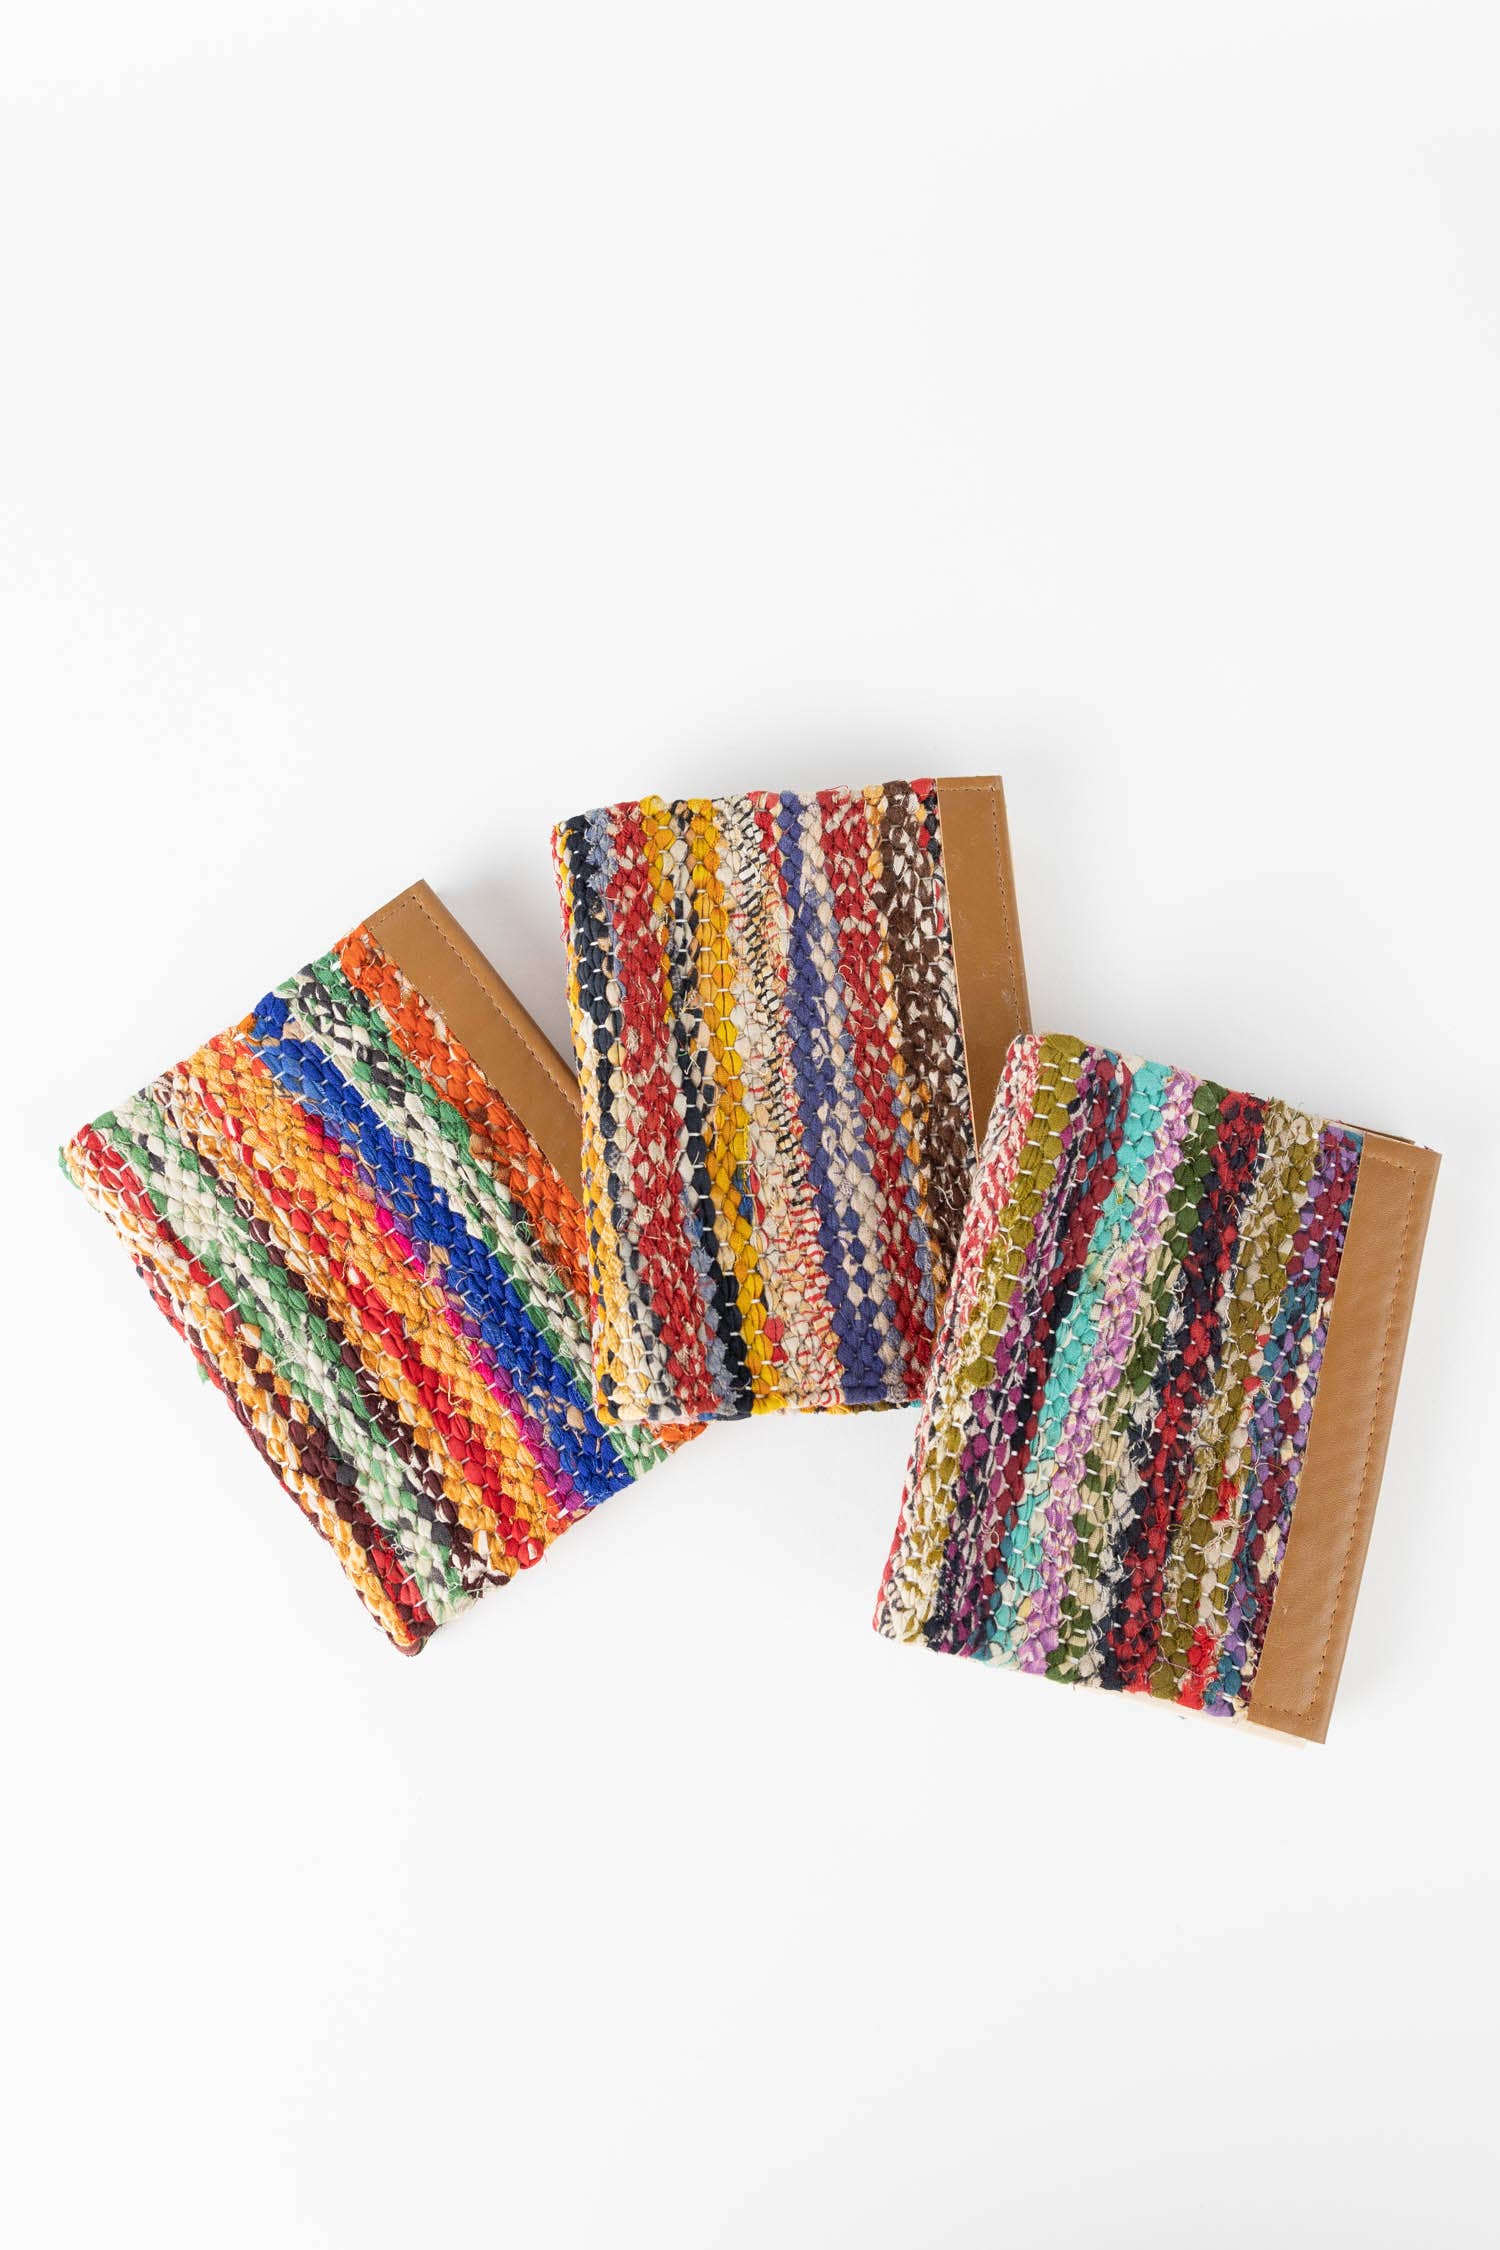 Woven Recycled Sari Journal